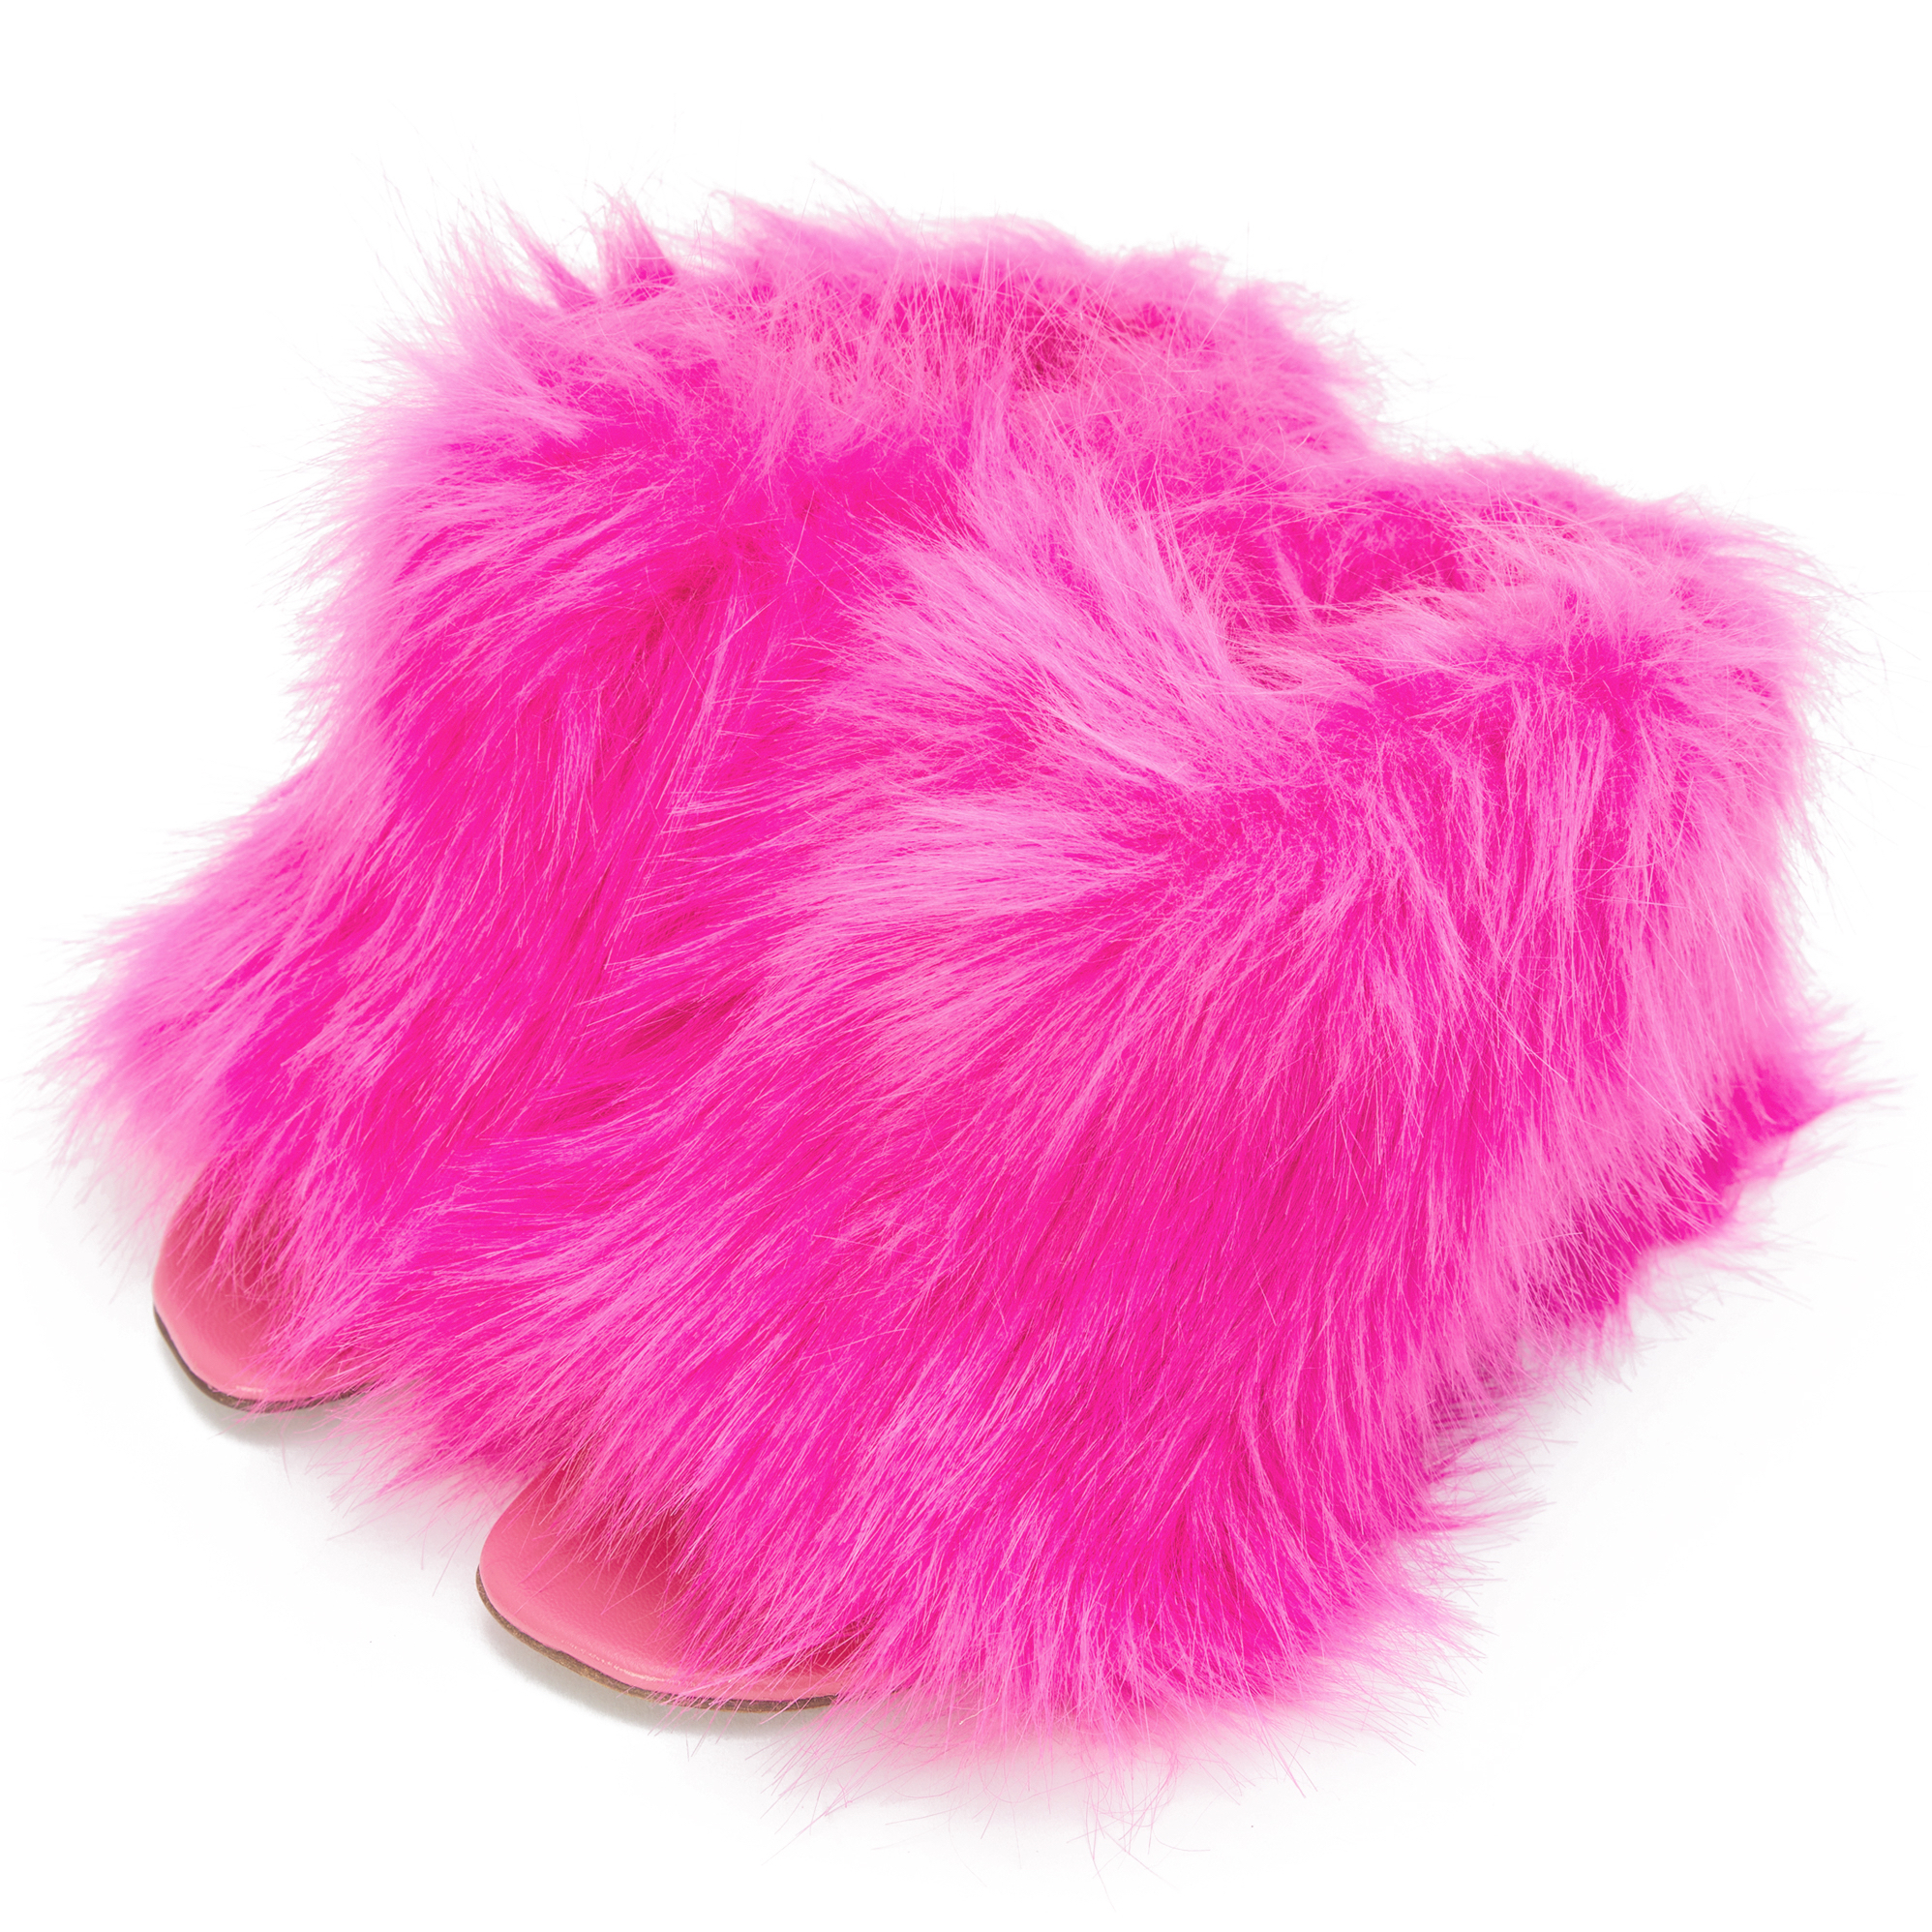 Розовые меховые туфли - Vetements SS20HE004/pink